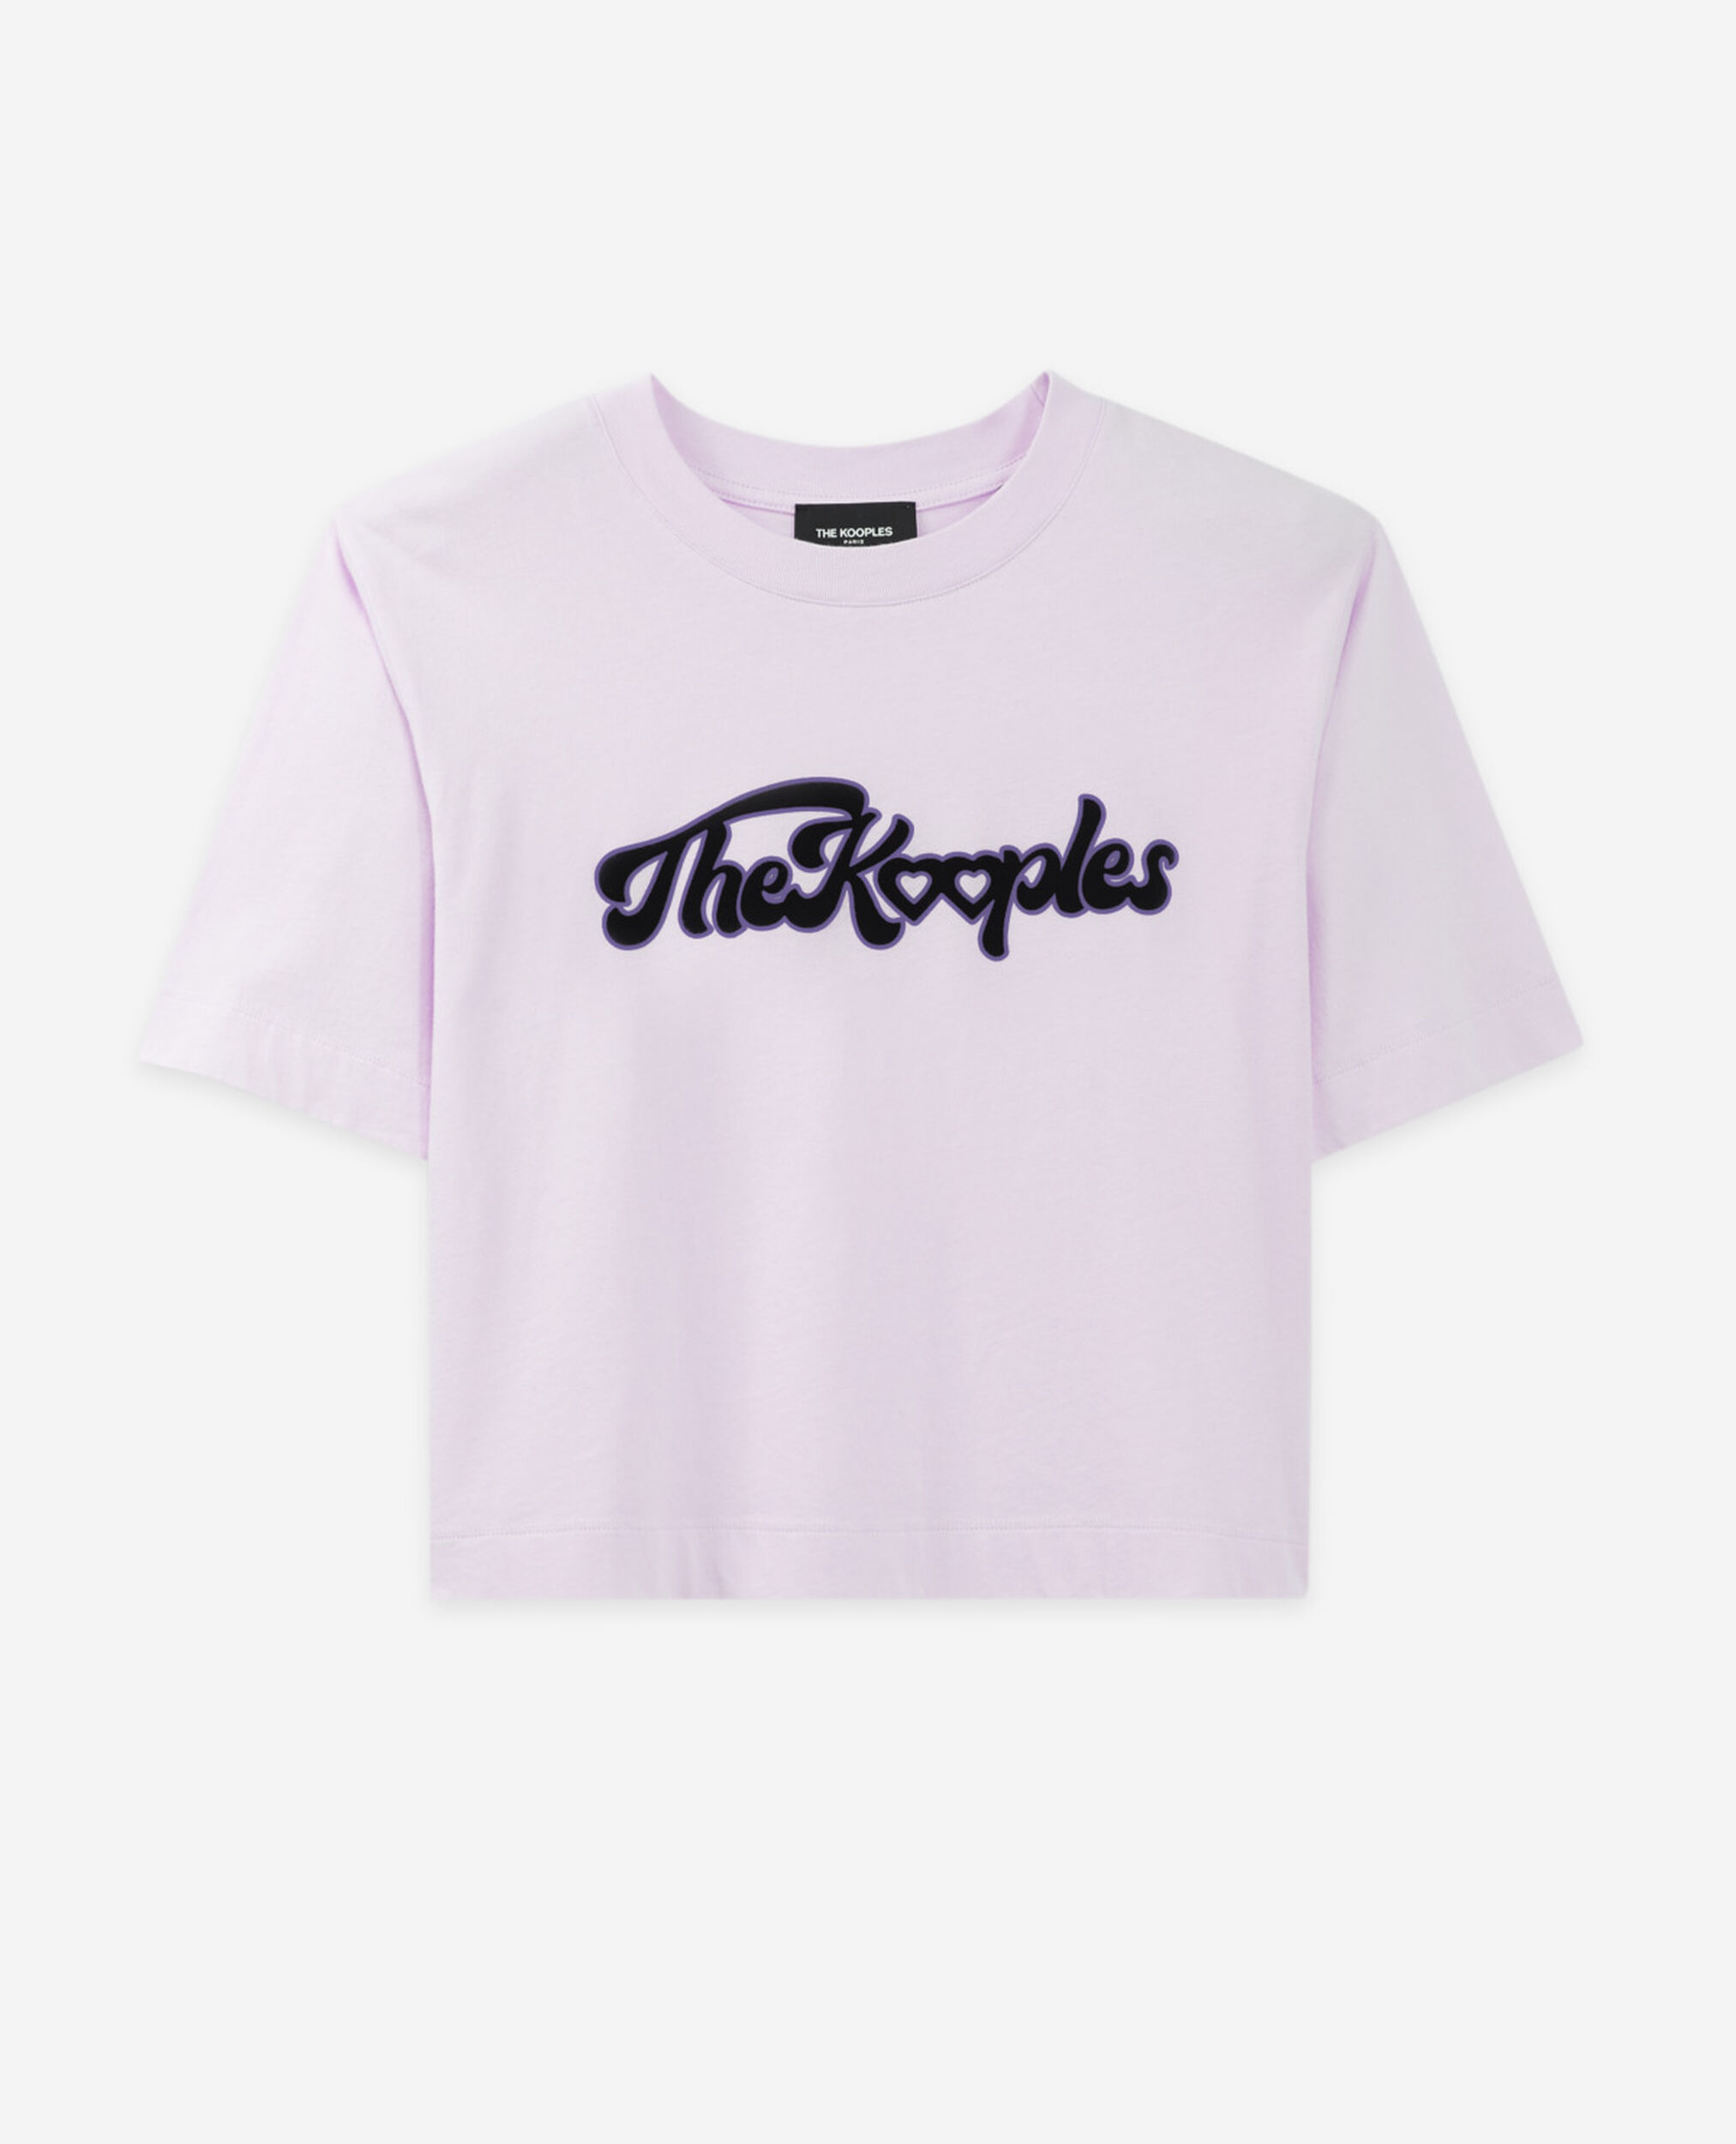 T-shirt rose pâle coton logo The Kooples, PINK, hi-res image number null